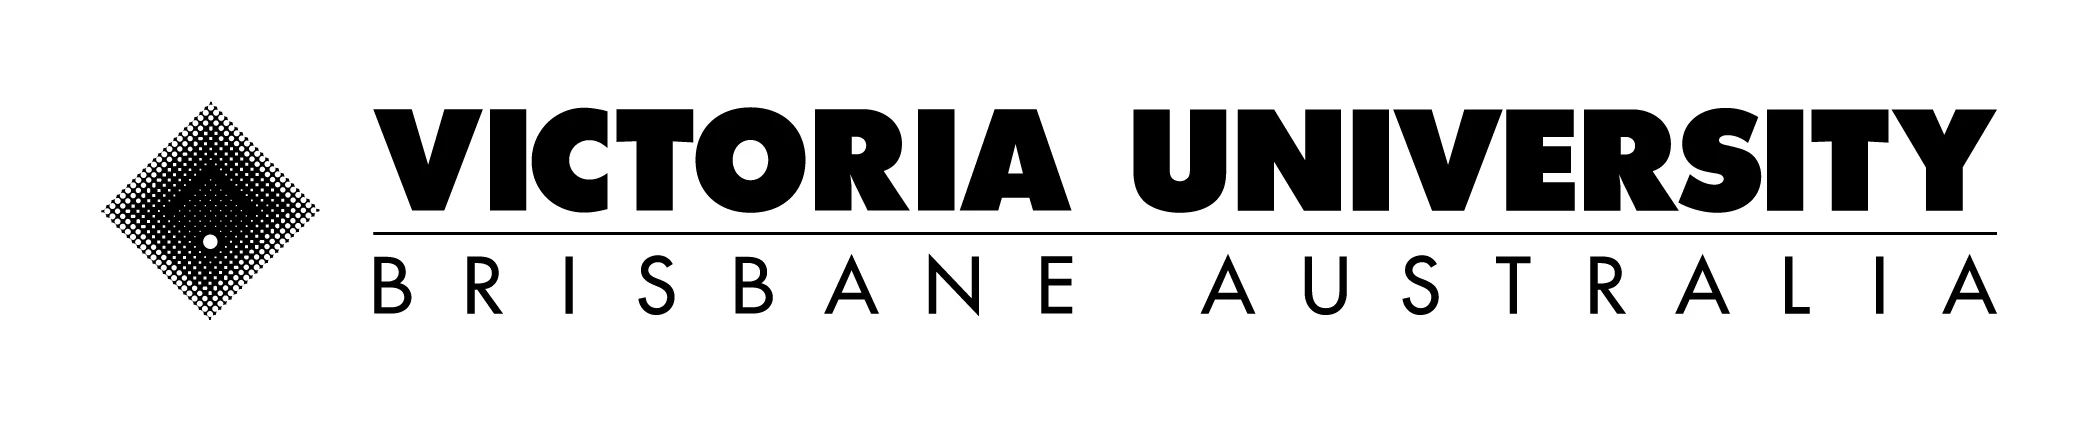 Victoria_University_Bris_Aus_Logo_Landscape_K-RGB